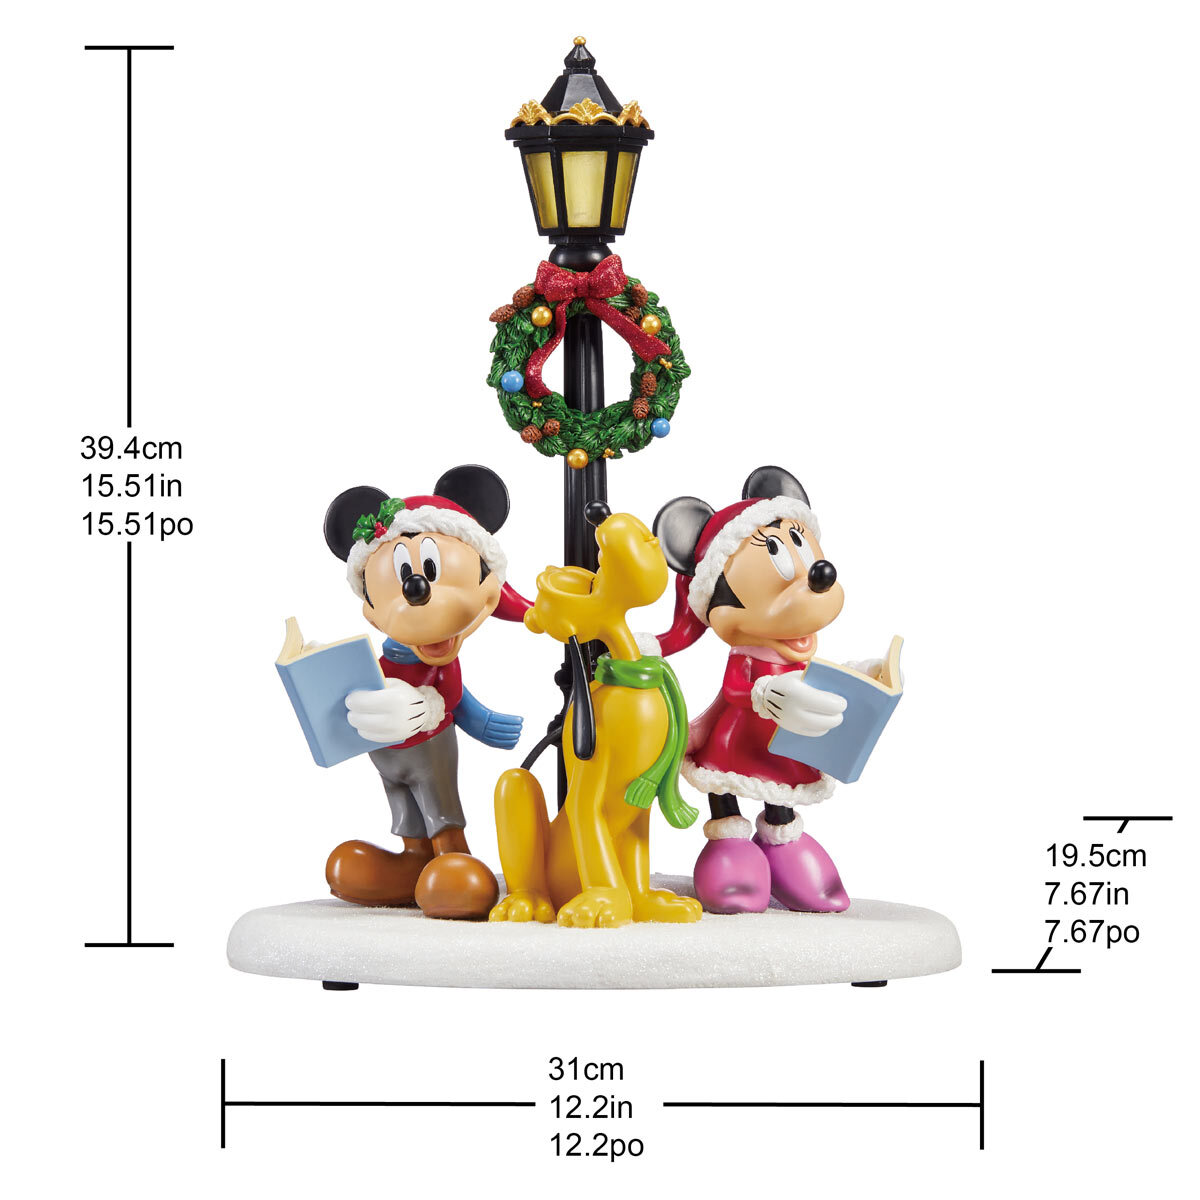 Buy Disney Christmas Caroler TableTop Dimensions Image at Costco.co.uk